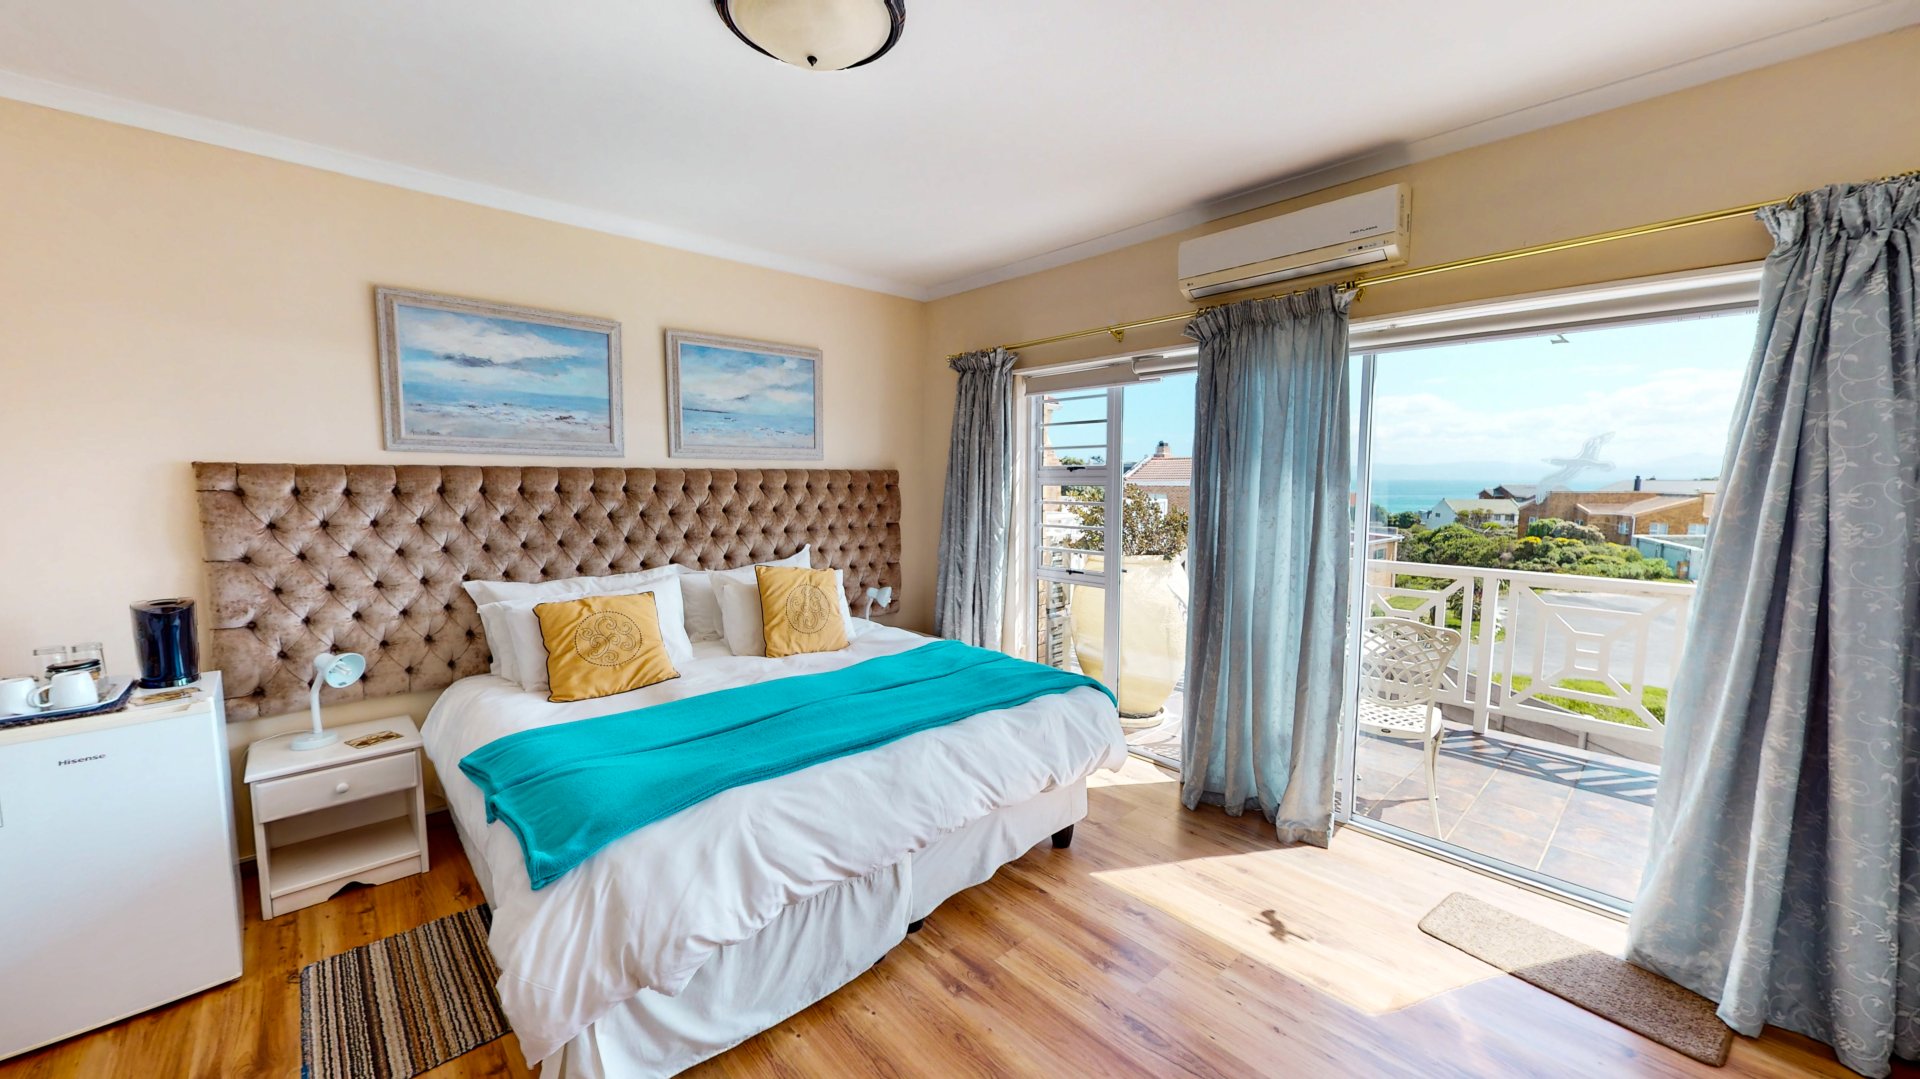  Bedroom Property for Sale in Perlemoenbaai Western Cape